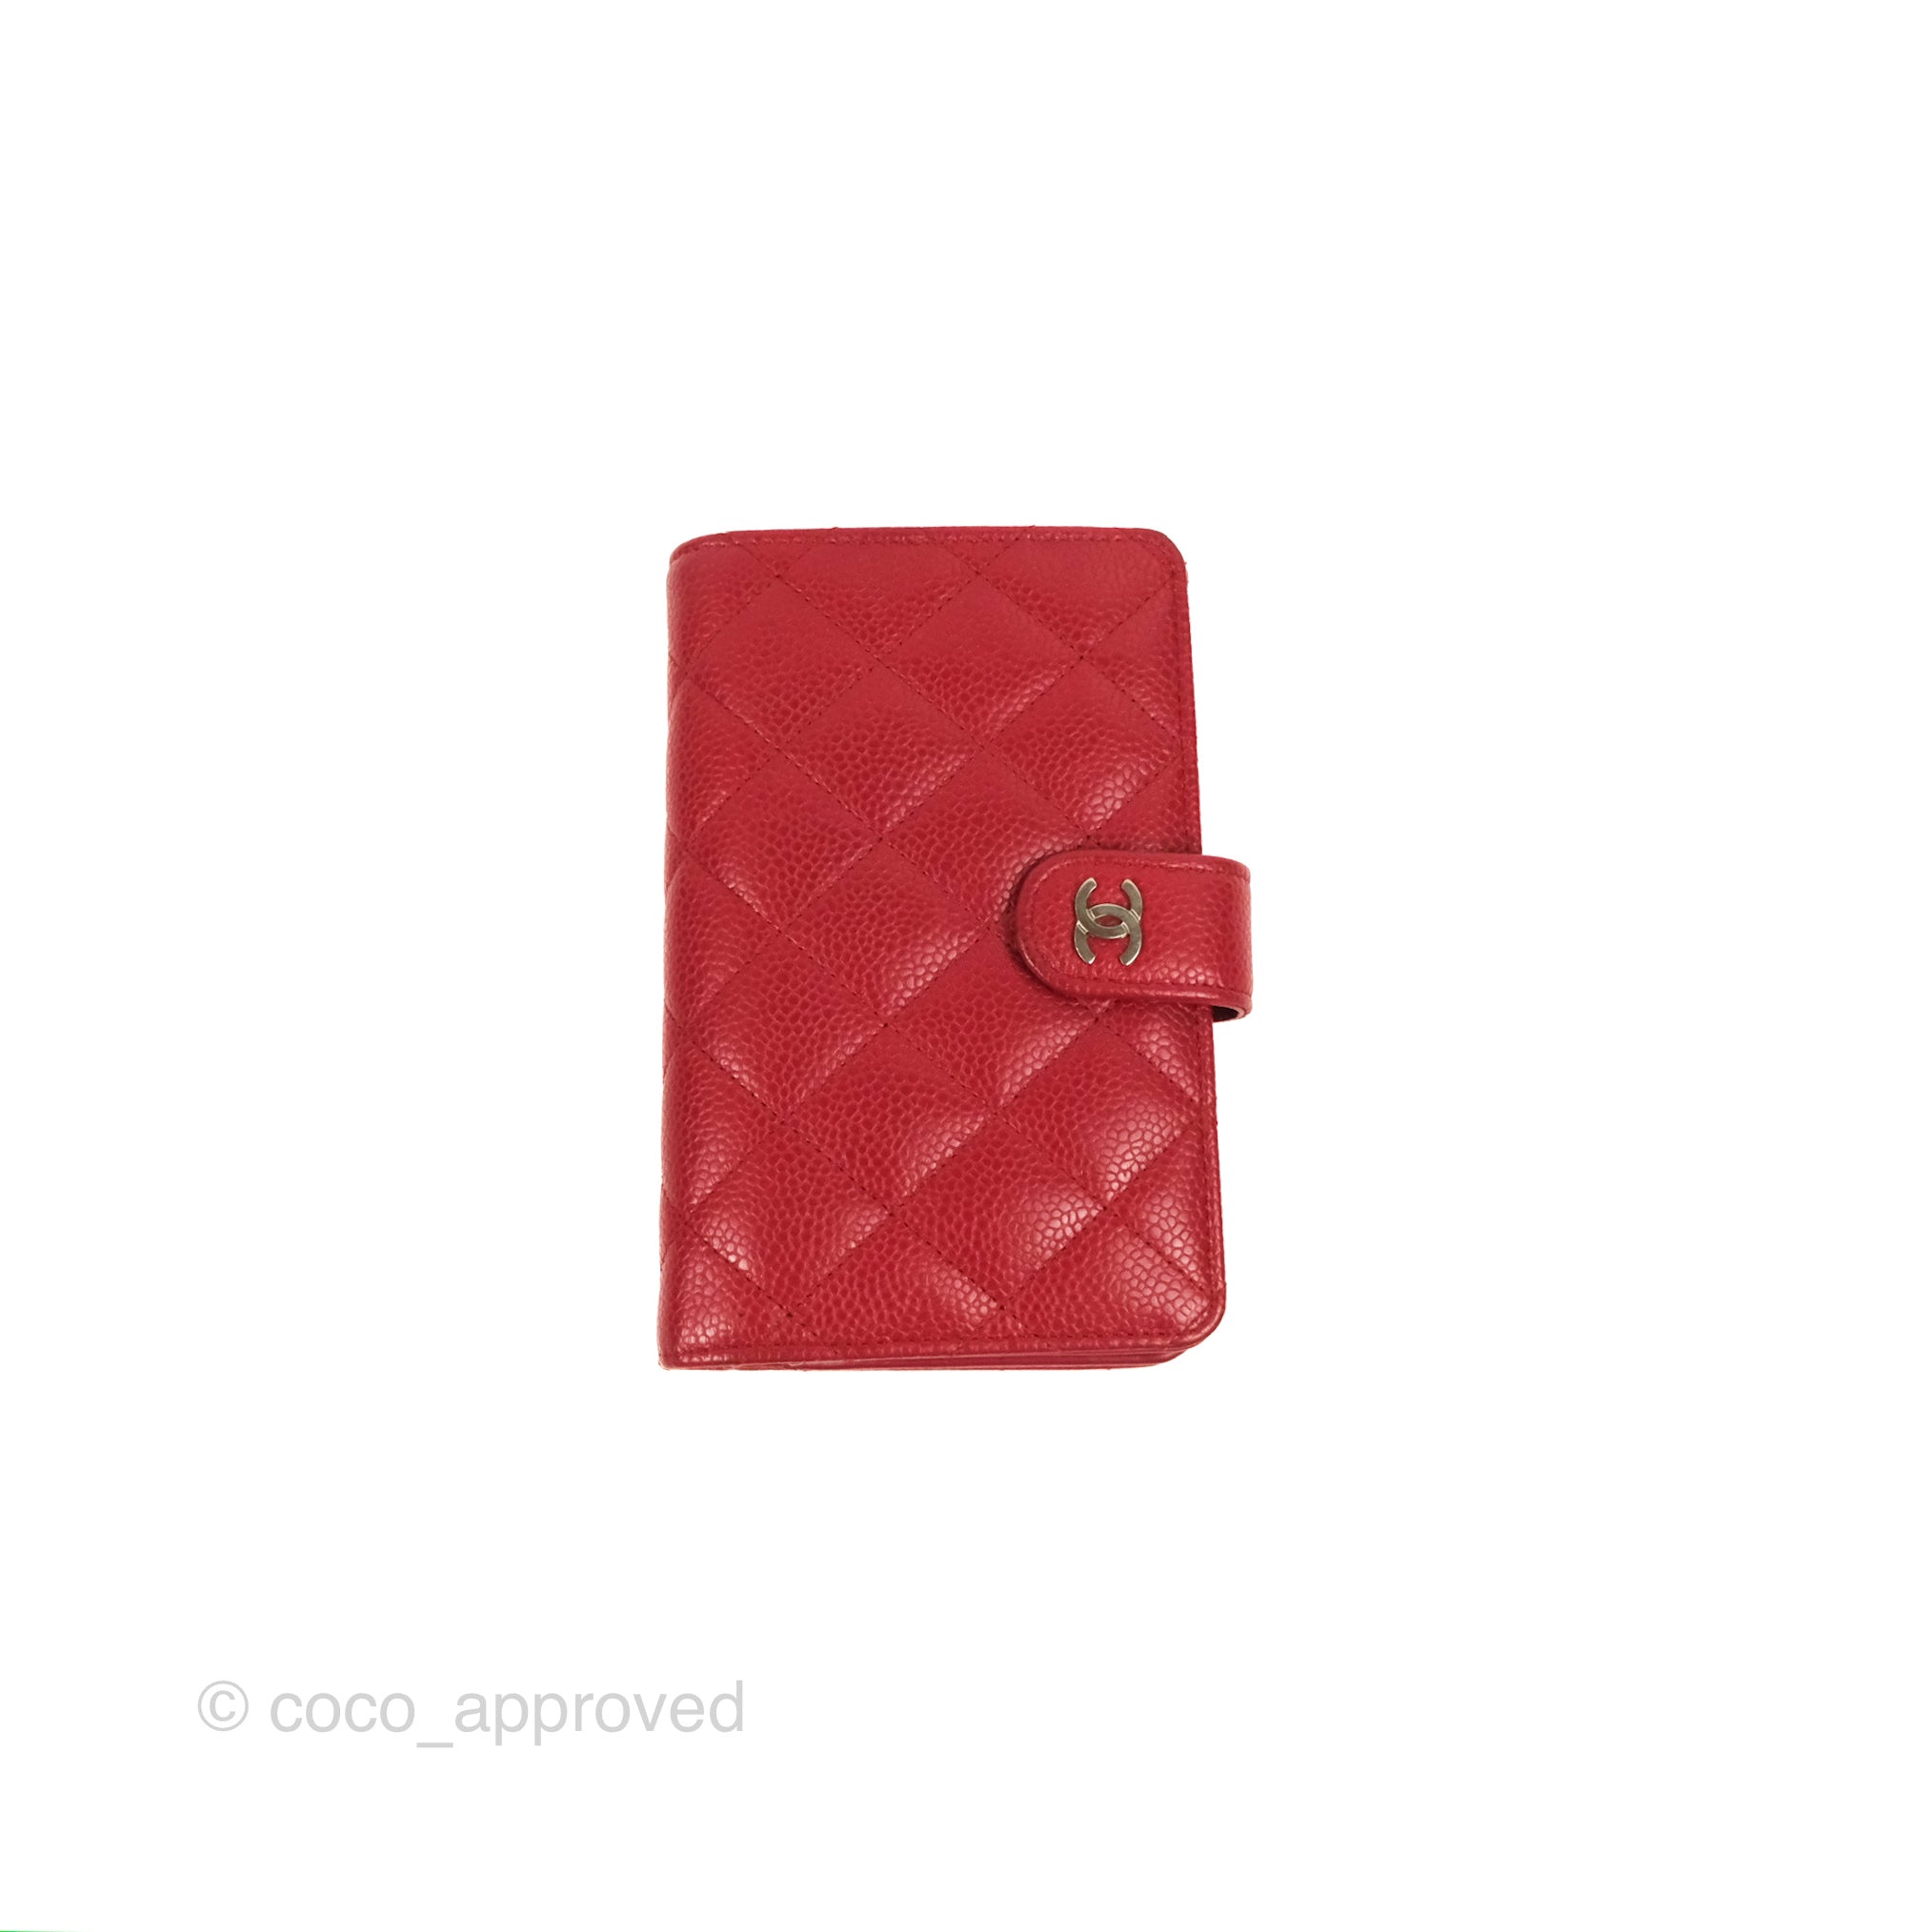 Chanel L-Zip wallet